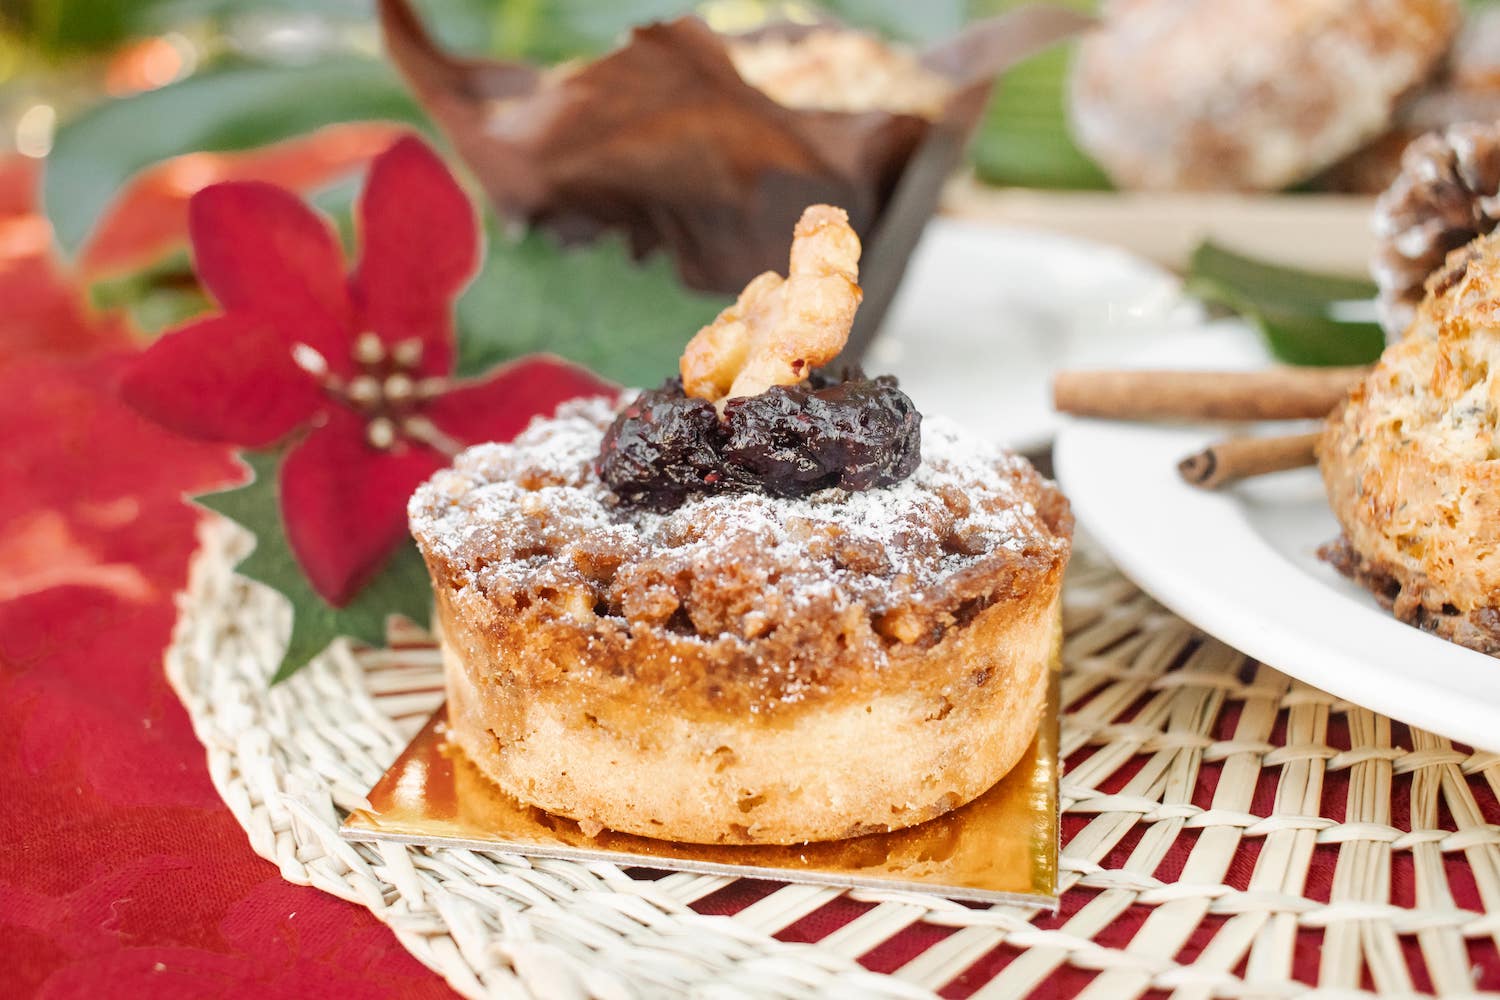 Honolulu Coffee seasonal menu item: Walnut Coffee Cake